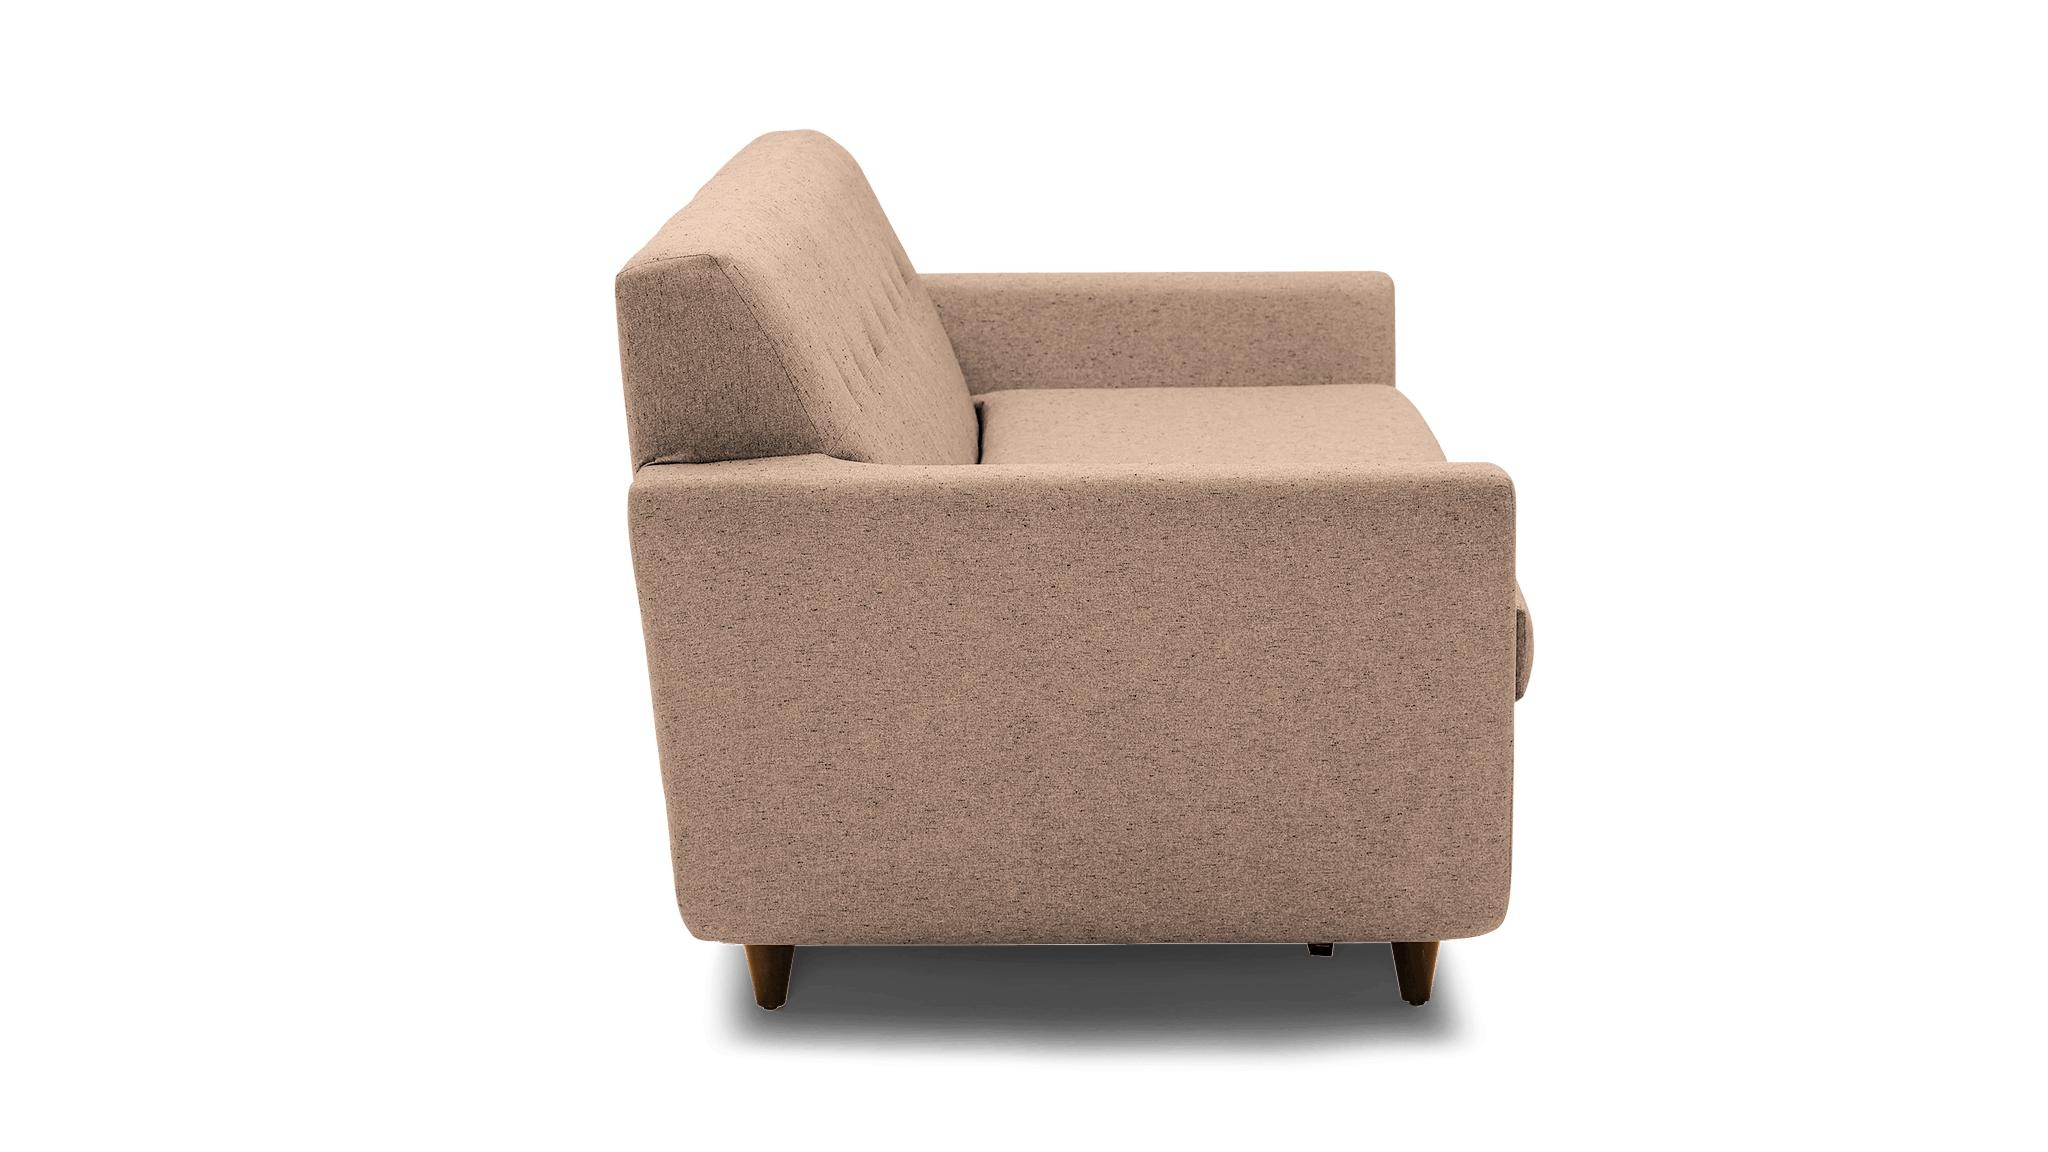 Pink Hughes Mid Century Modern Sleeper Sofa - Royale Blush - Mocha - Image 2